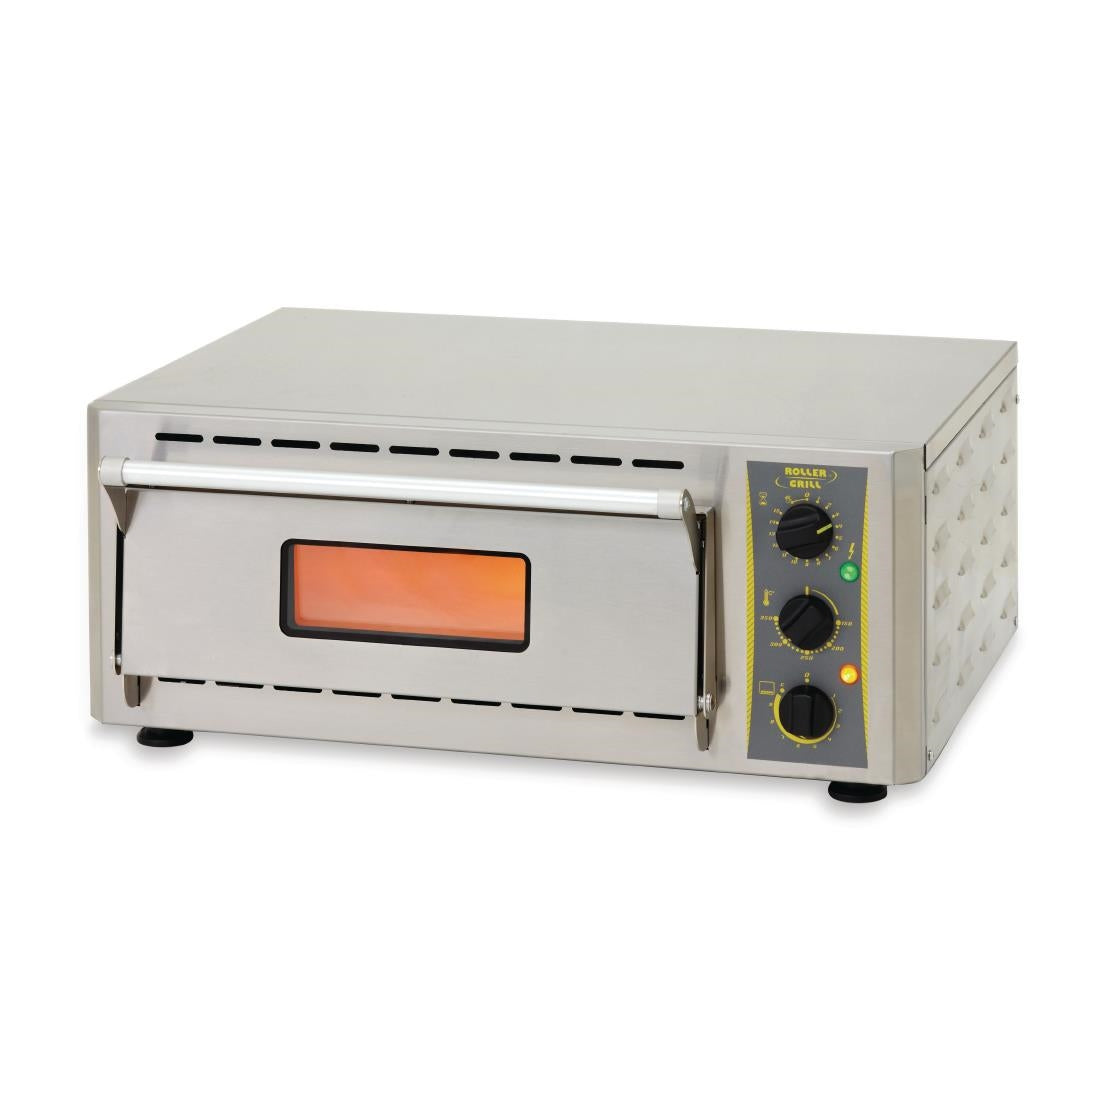 DA183 Roller Grill Single Deck Pizza Oven PZ430 S JD Catering Equipment Solutions Ltd